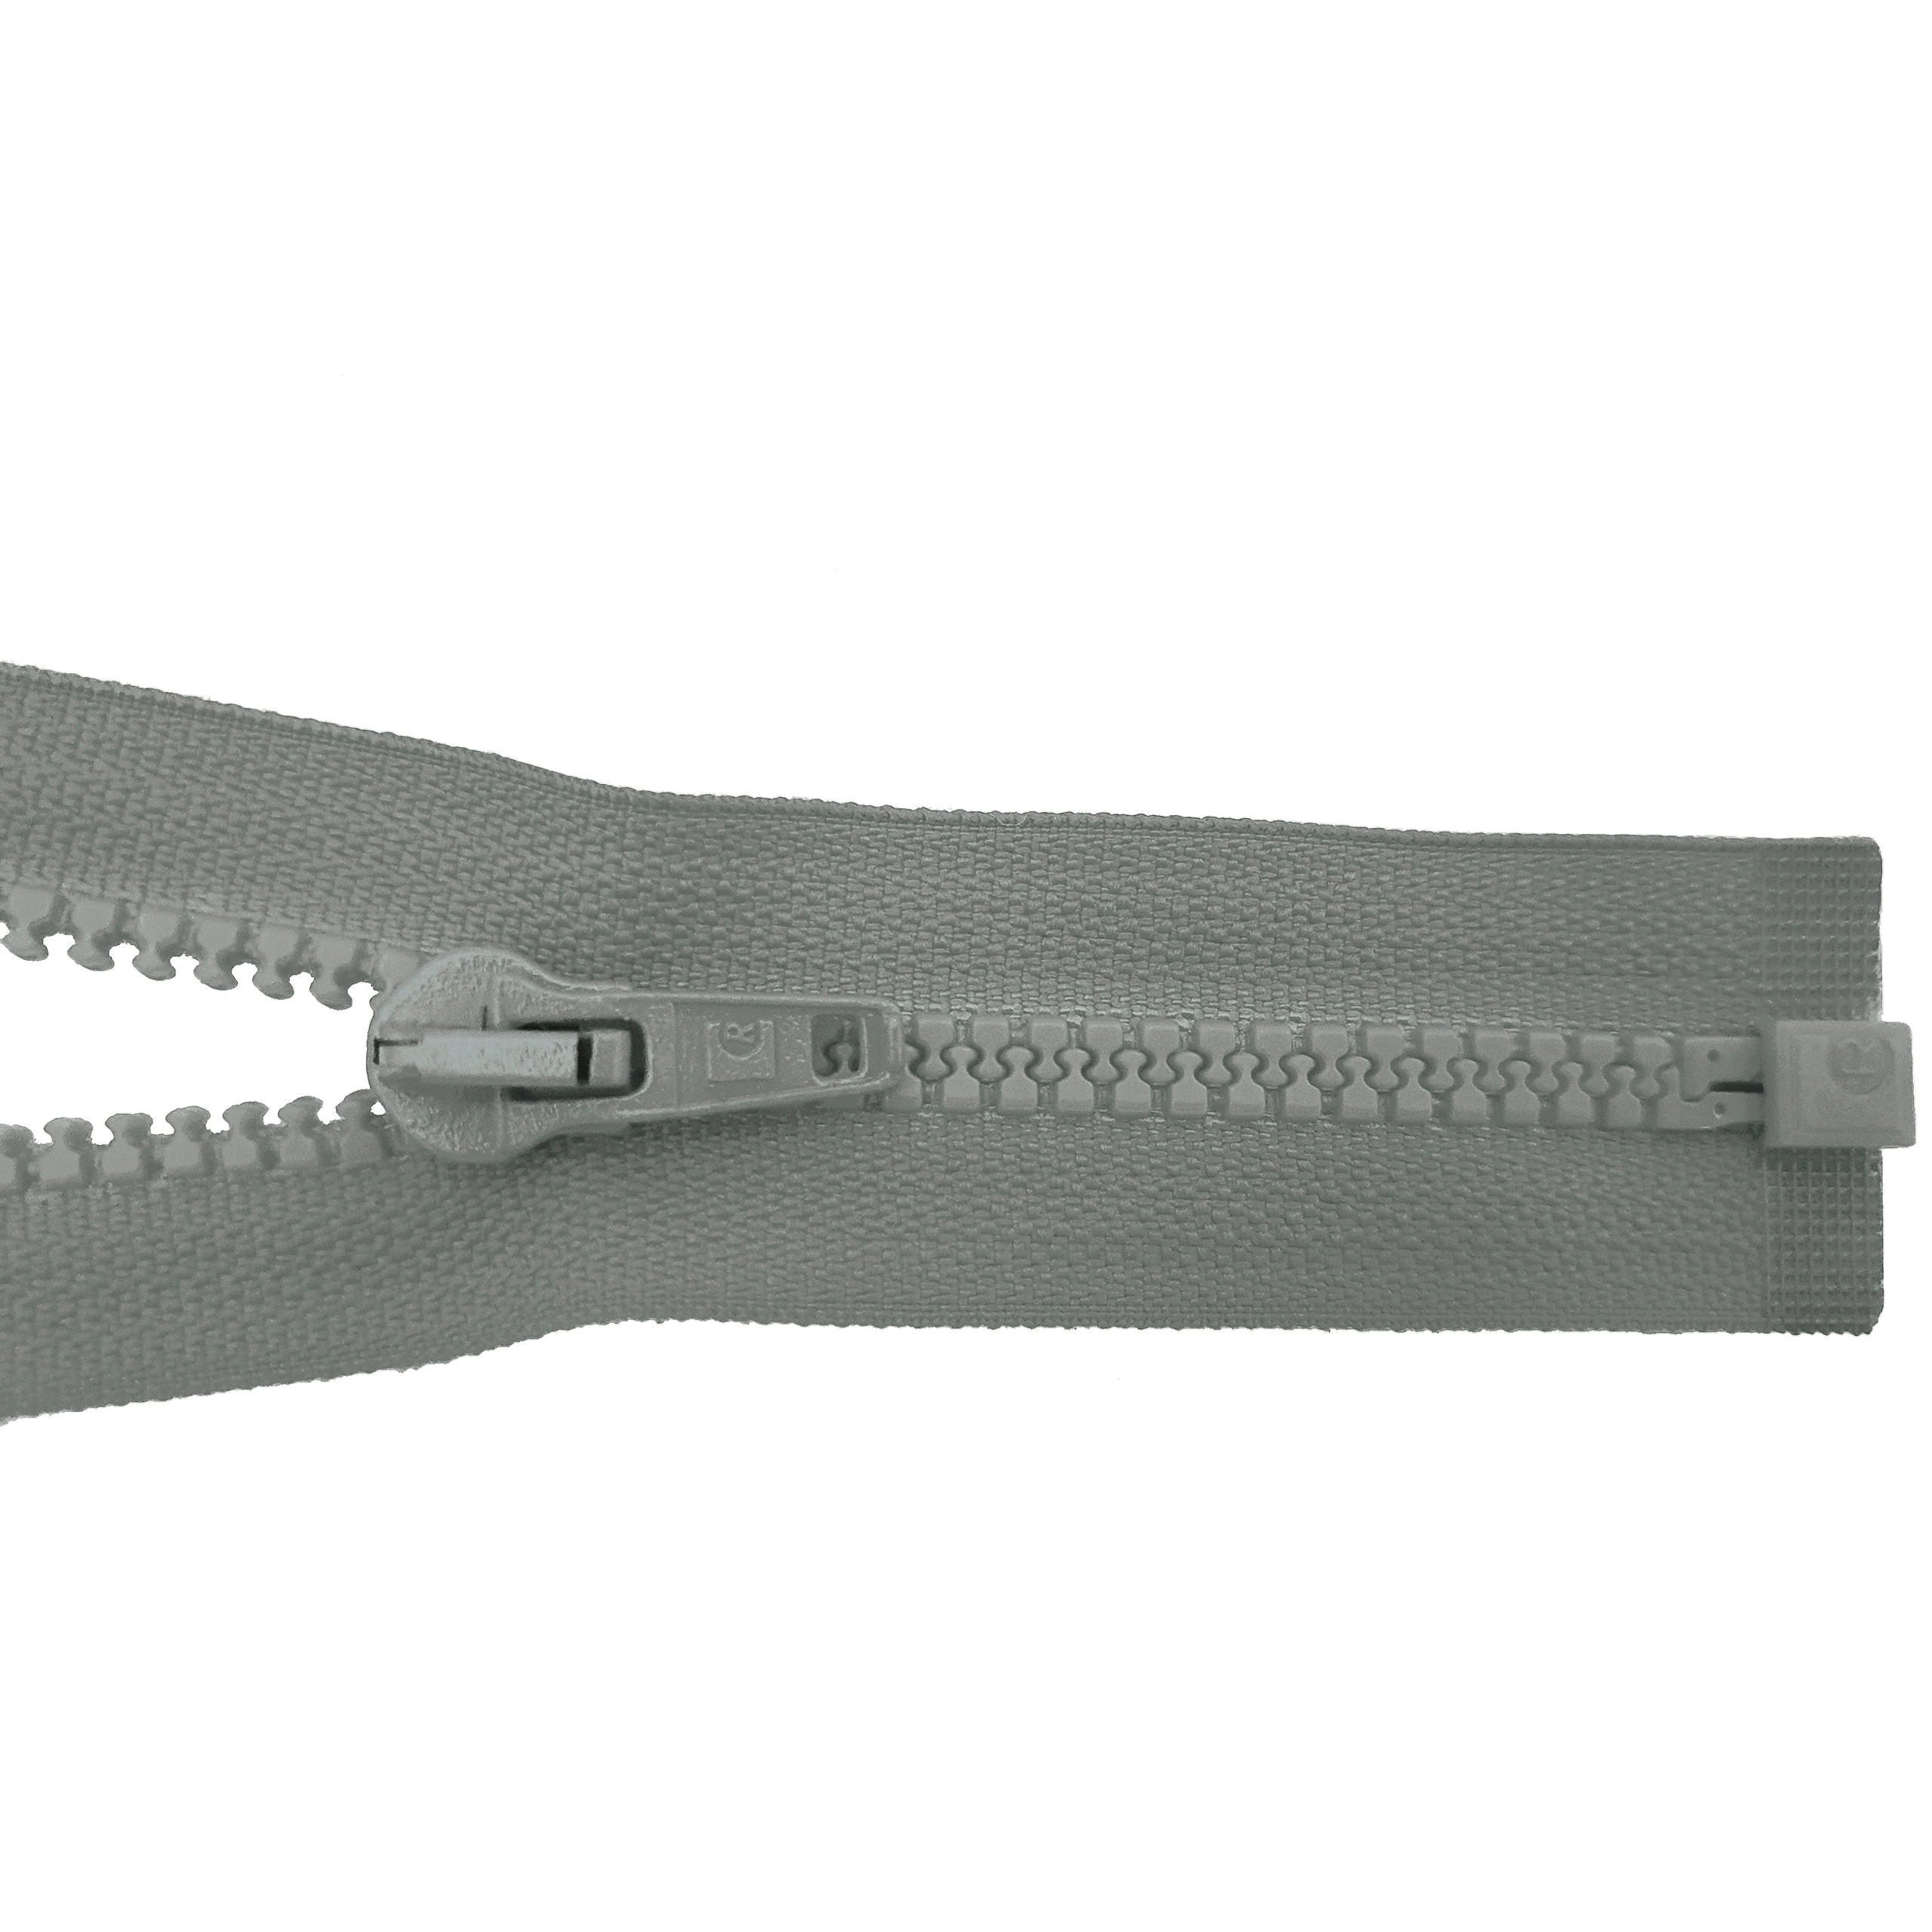 zipper 80cm,divisible, molded plastic, wide, grey